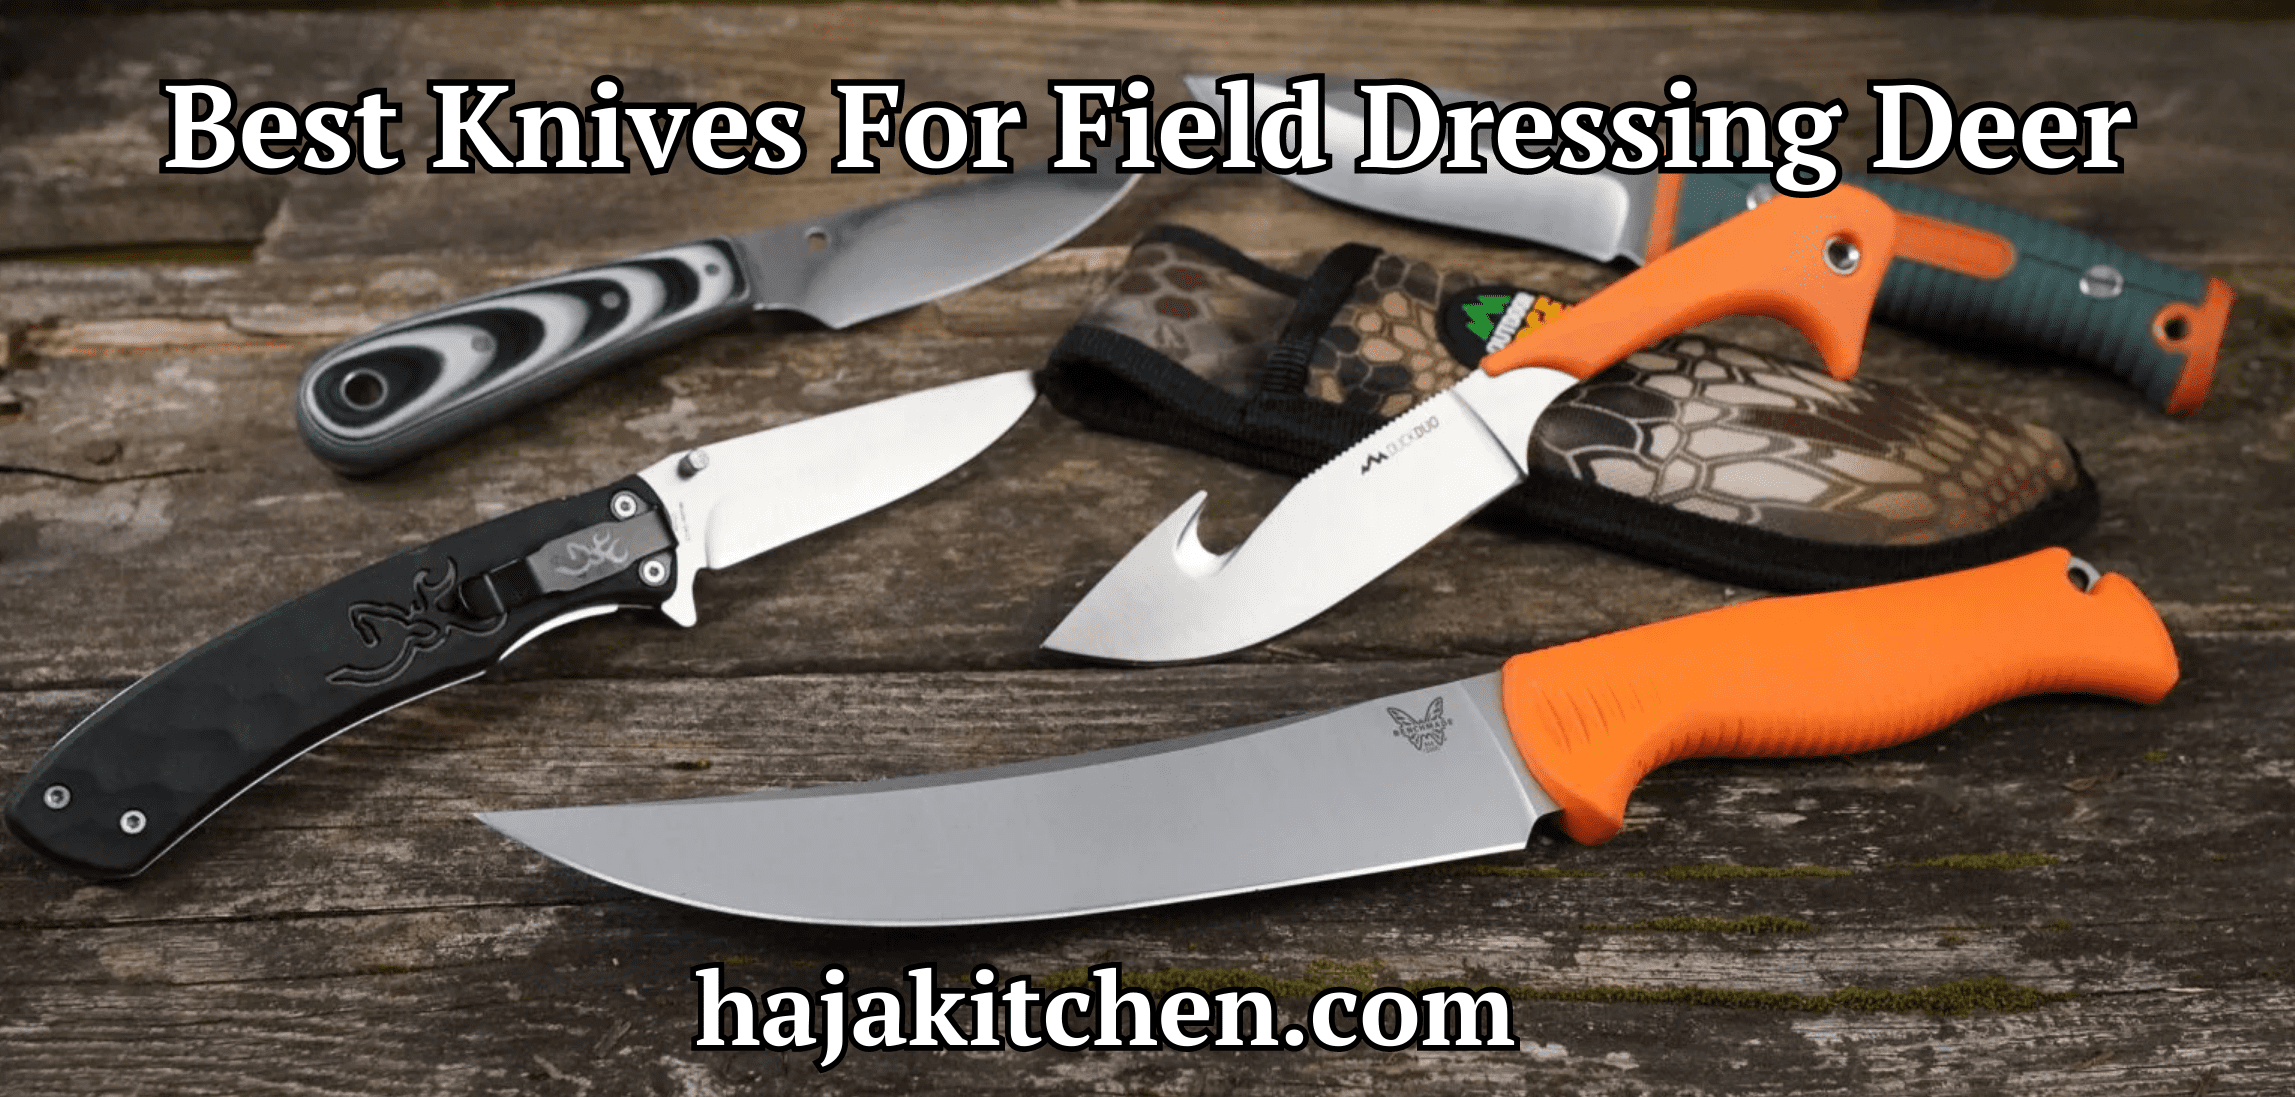 8 Best Knives For Field Dressing Deer